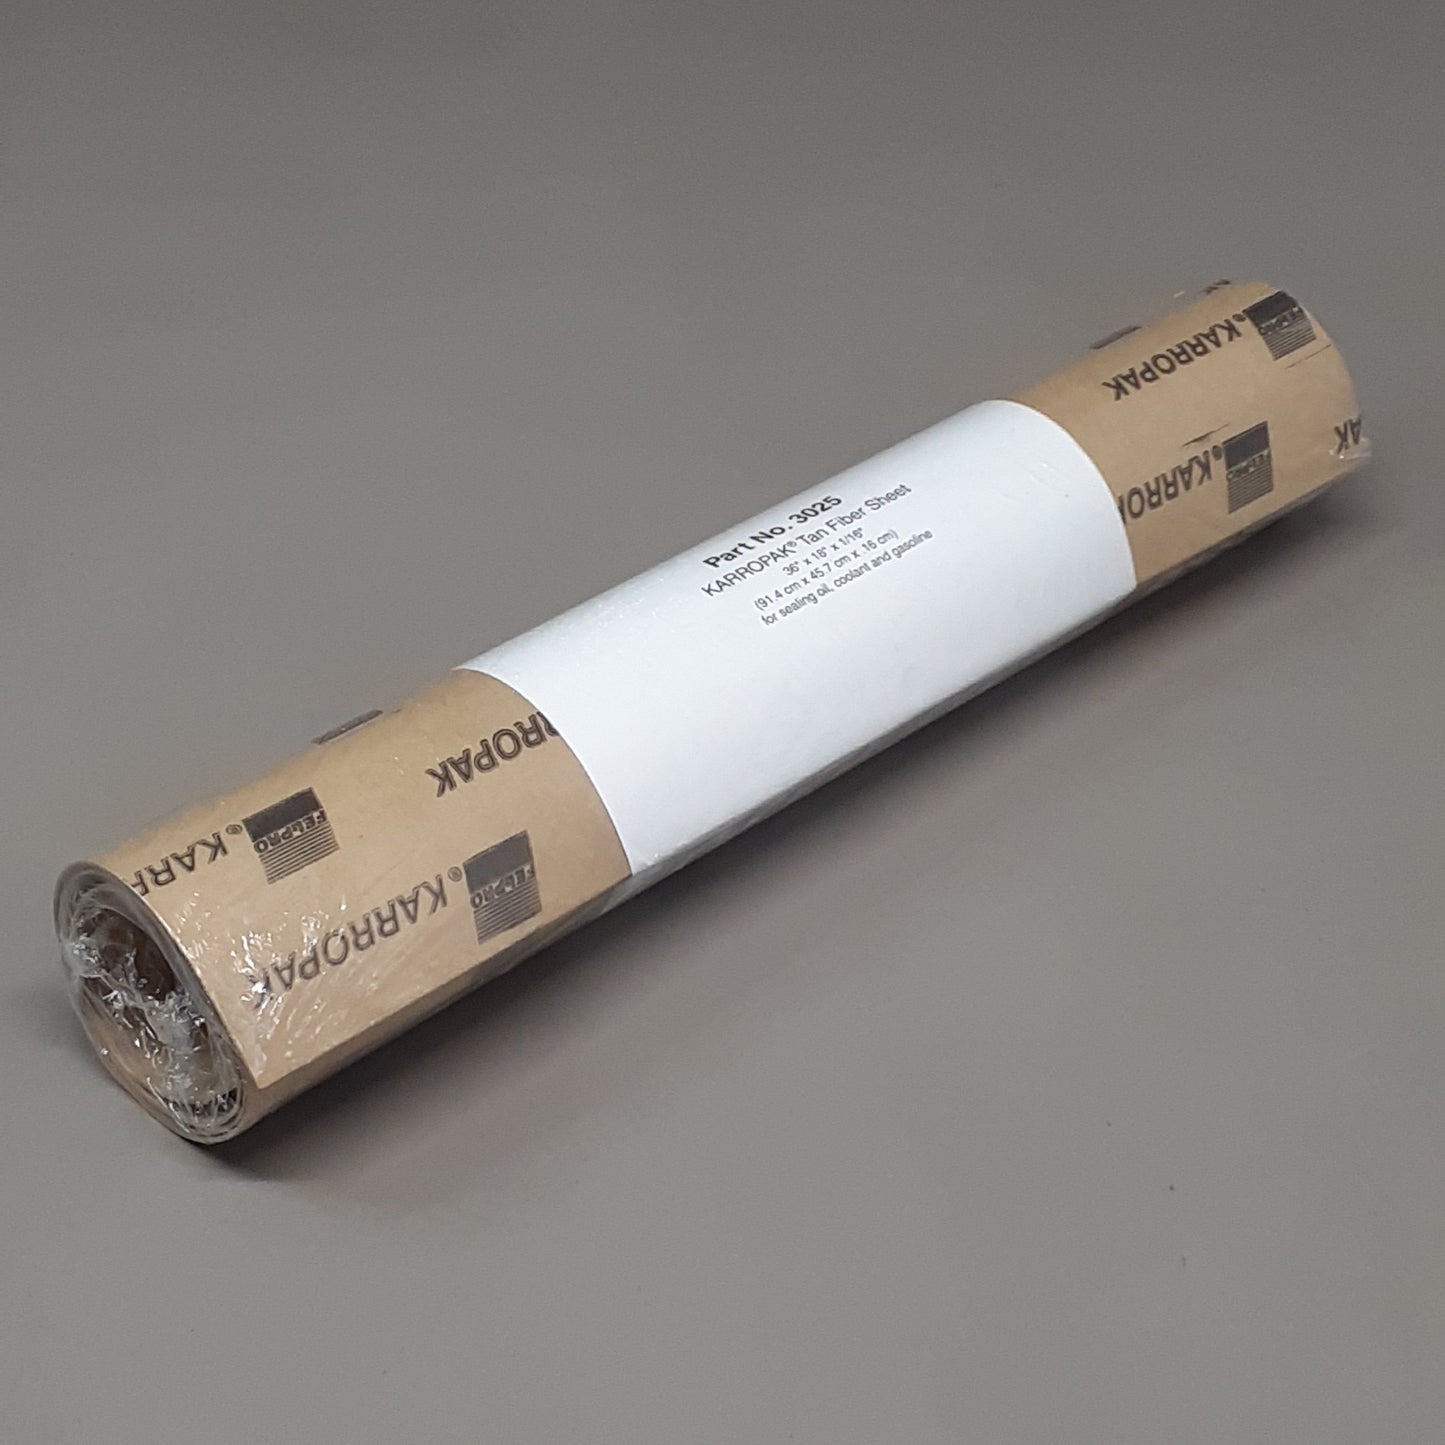 FEL-PRO Karropak Tan Fiber Sheet Gasket Materials 3025 (New)